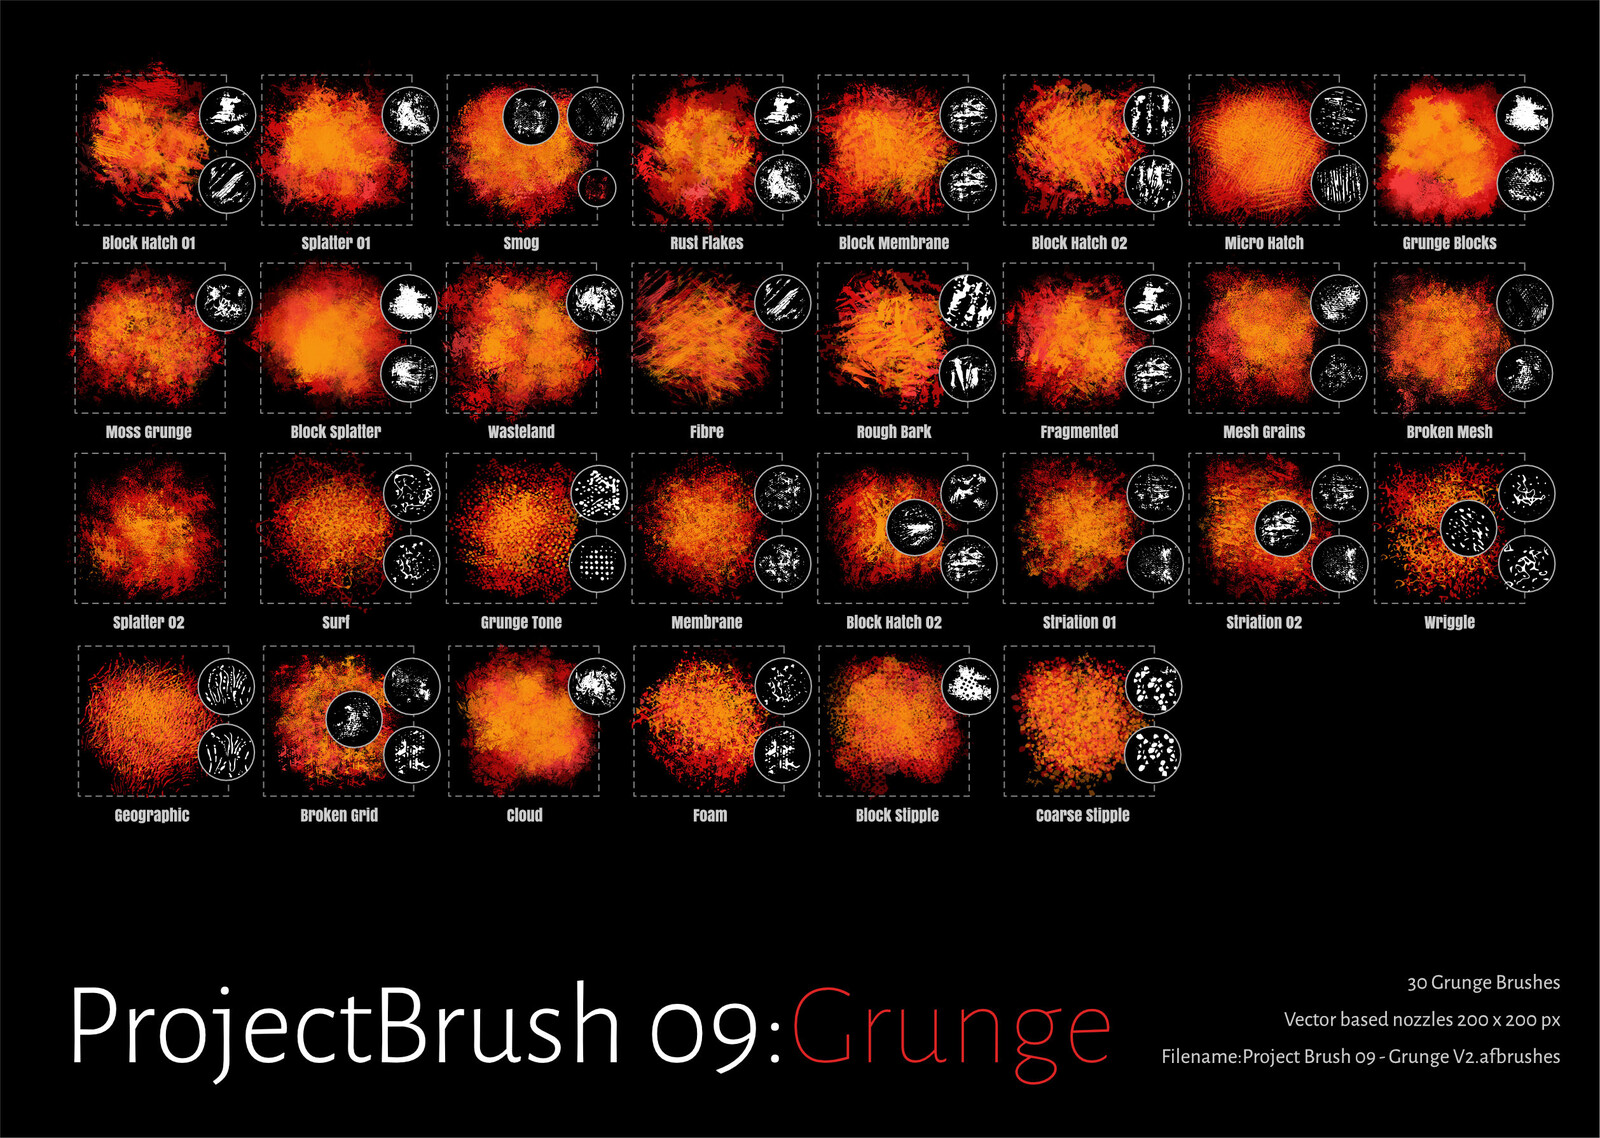 Project Brush 09: Grunge
30 Raster Grunge Brushes